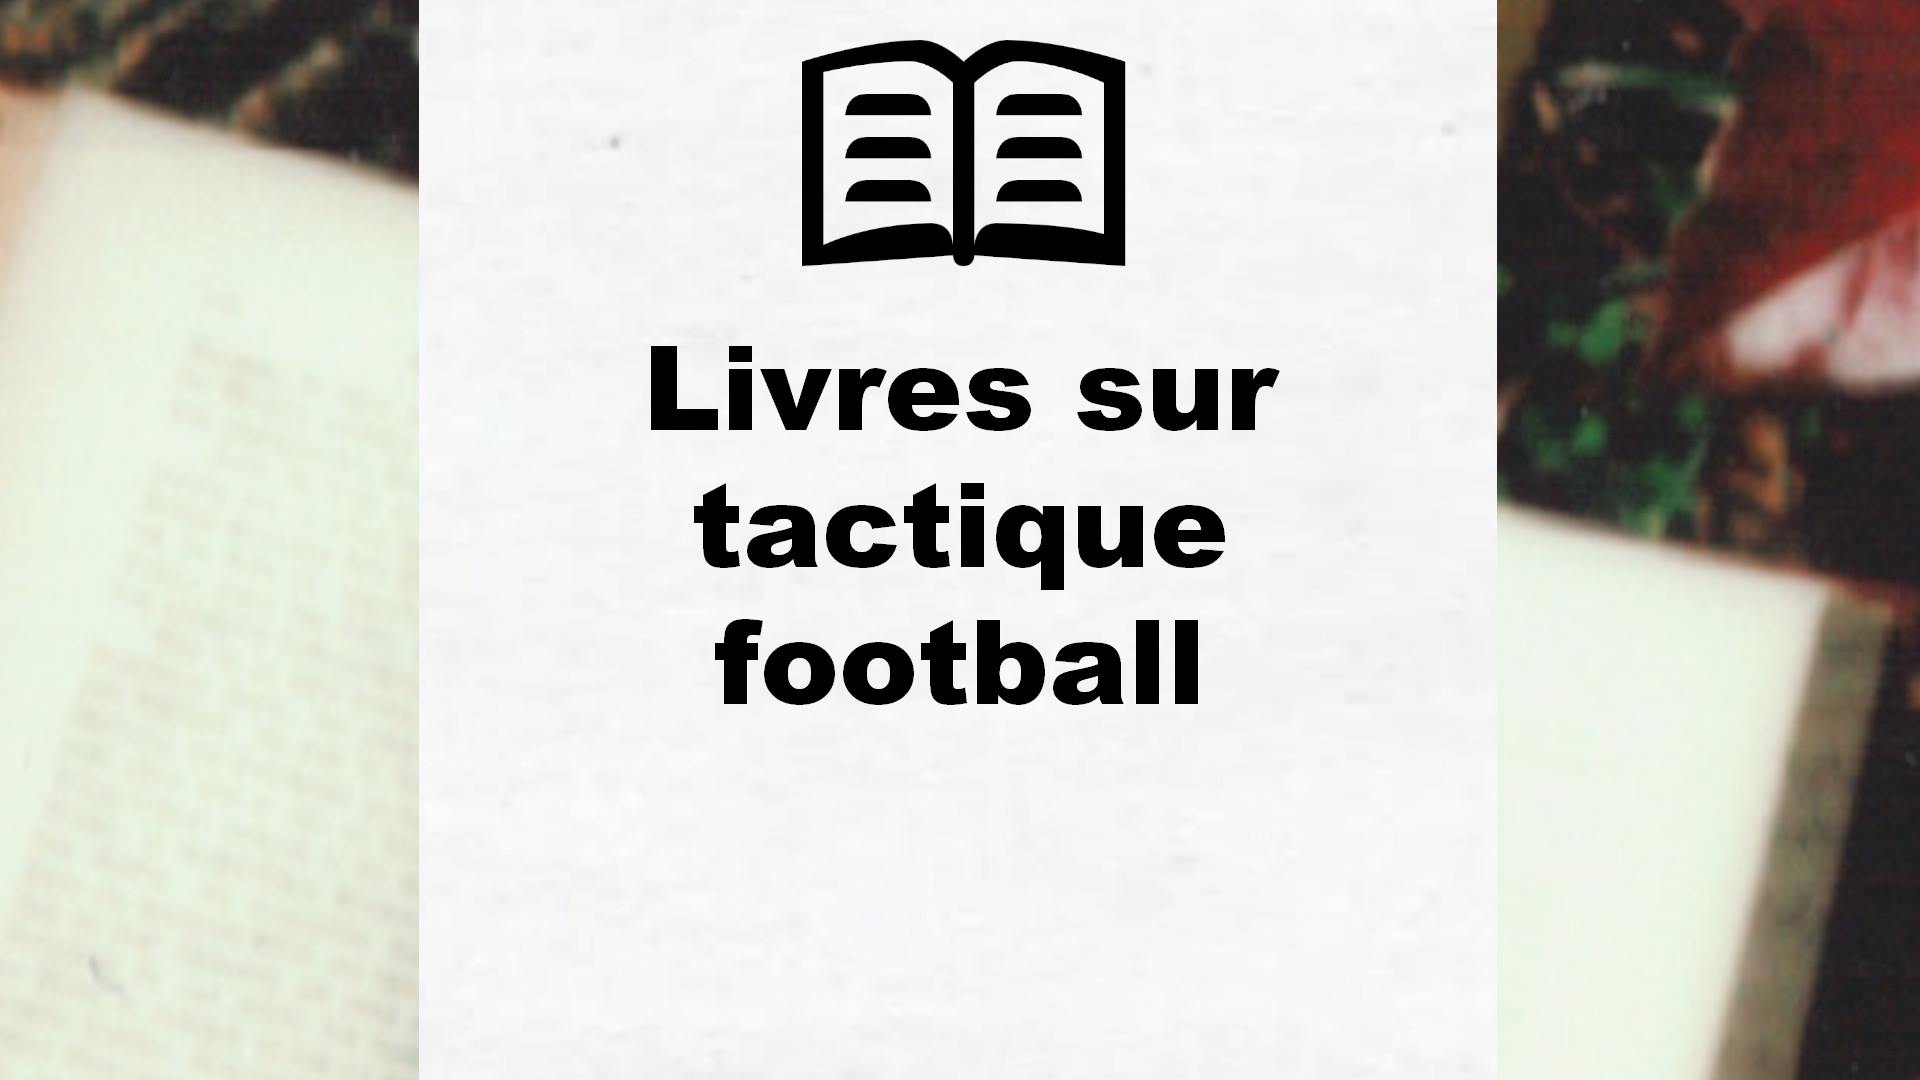 Livres sur tactique football